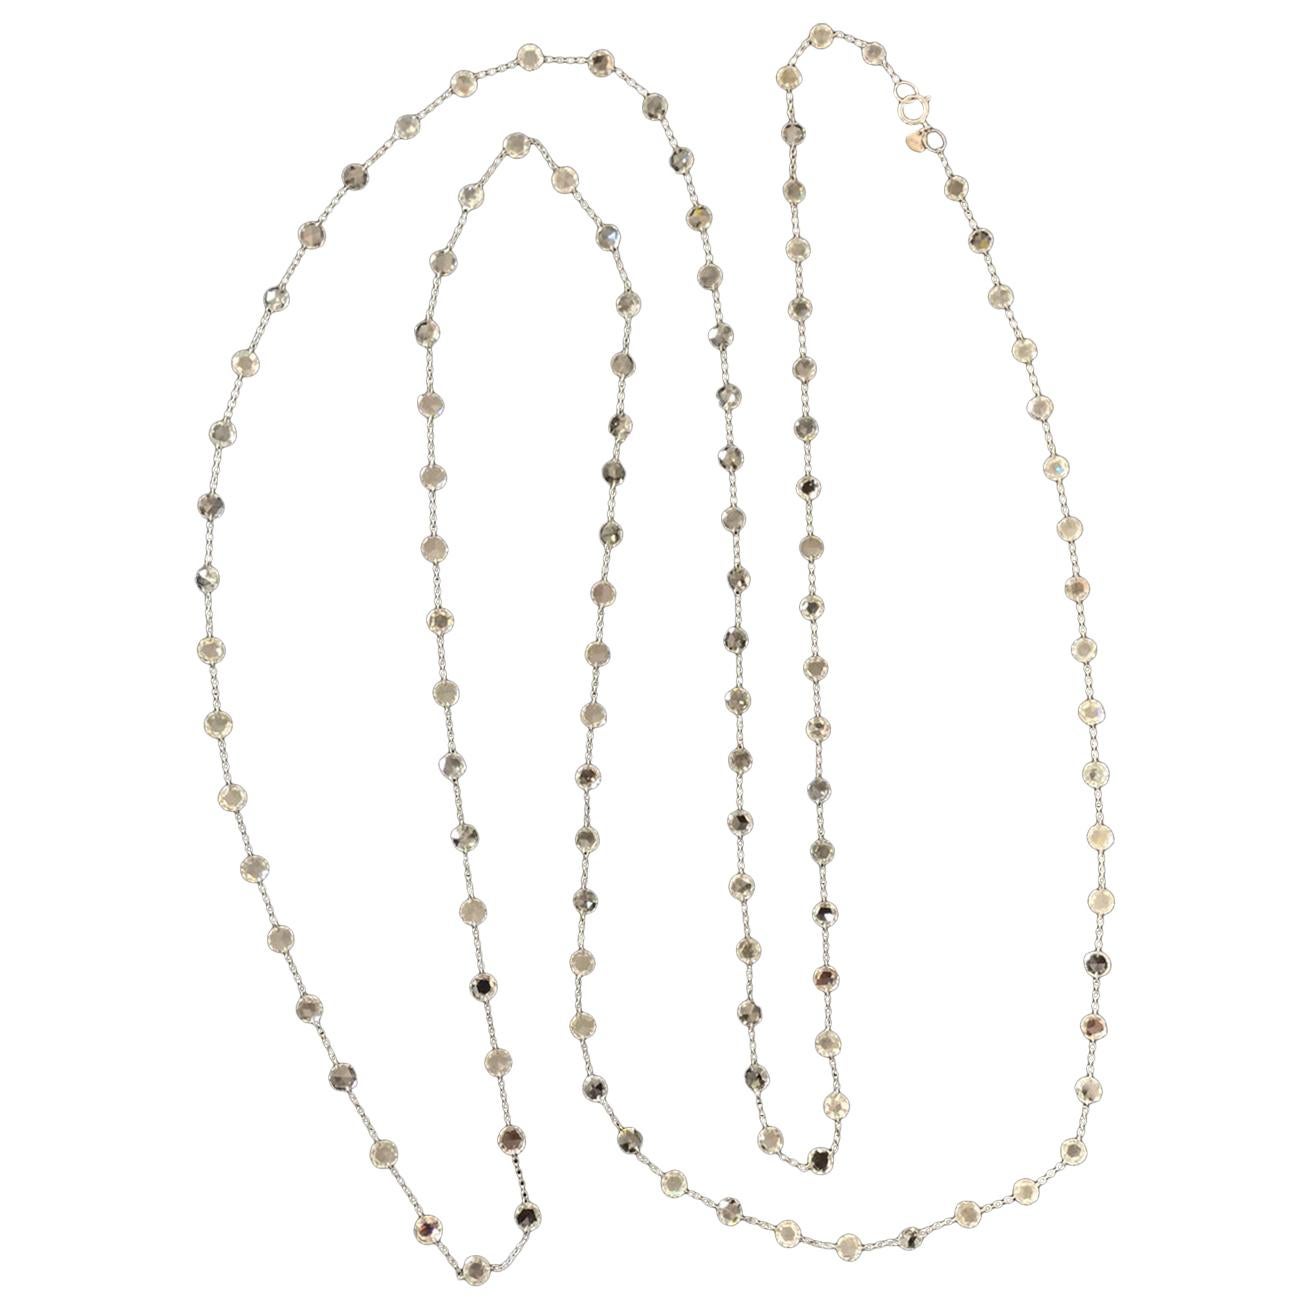 PANIM 12.17 Carats Diamond Rosecut 18k White Gold Necklace